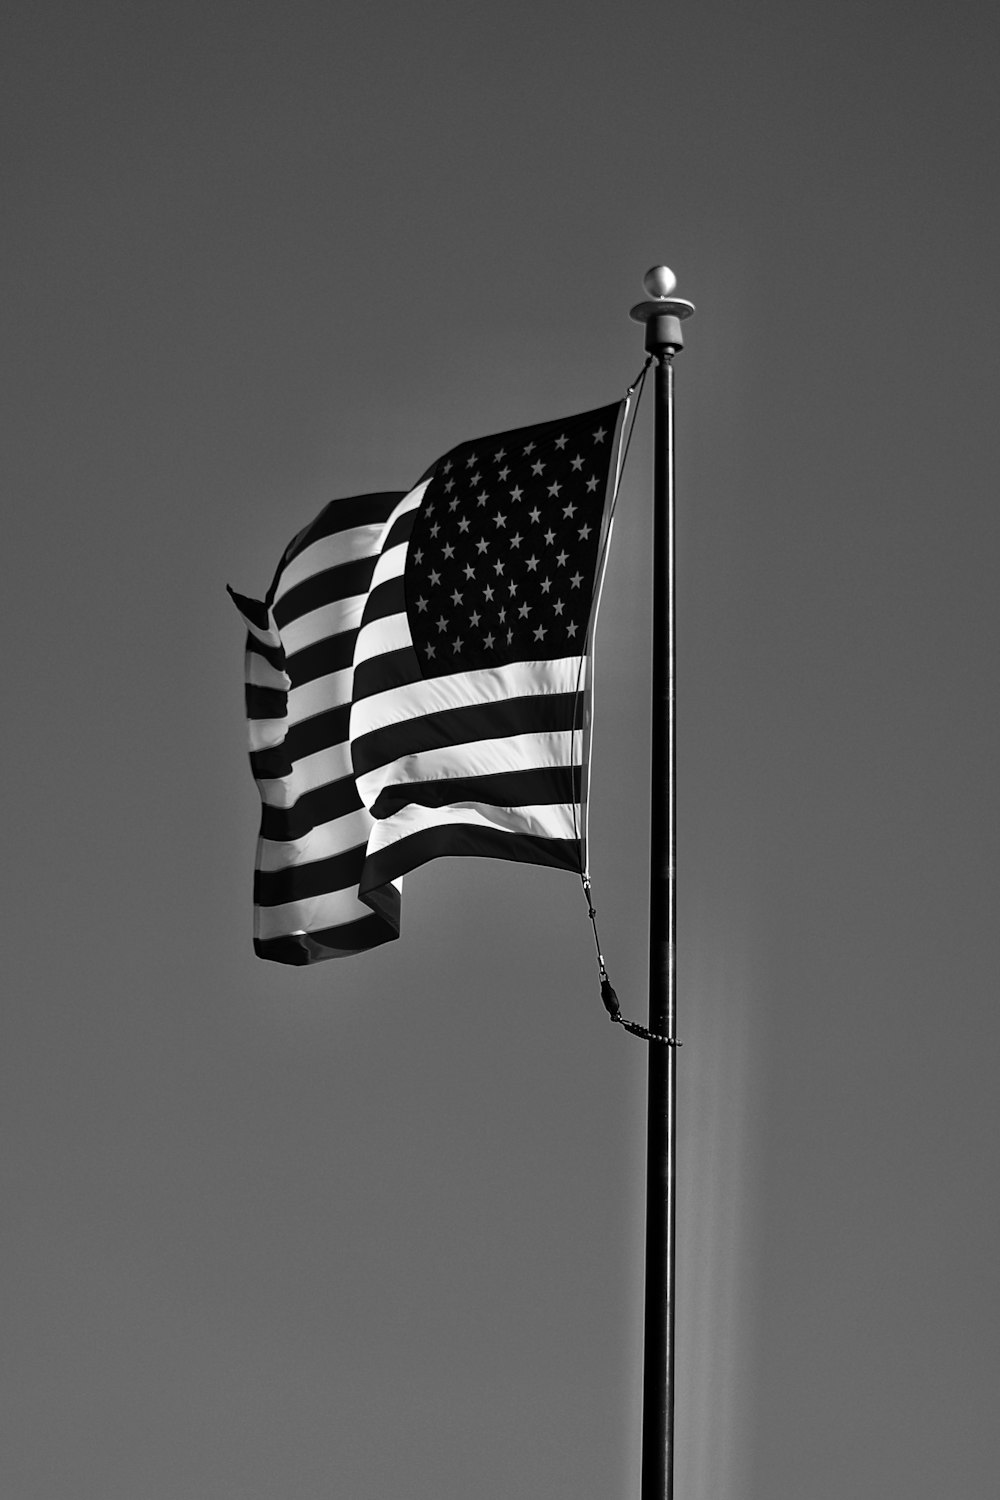 foto in scala di grigi di noi una bandiera